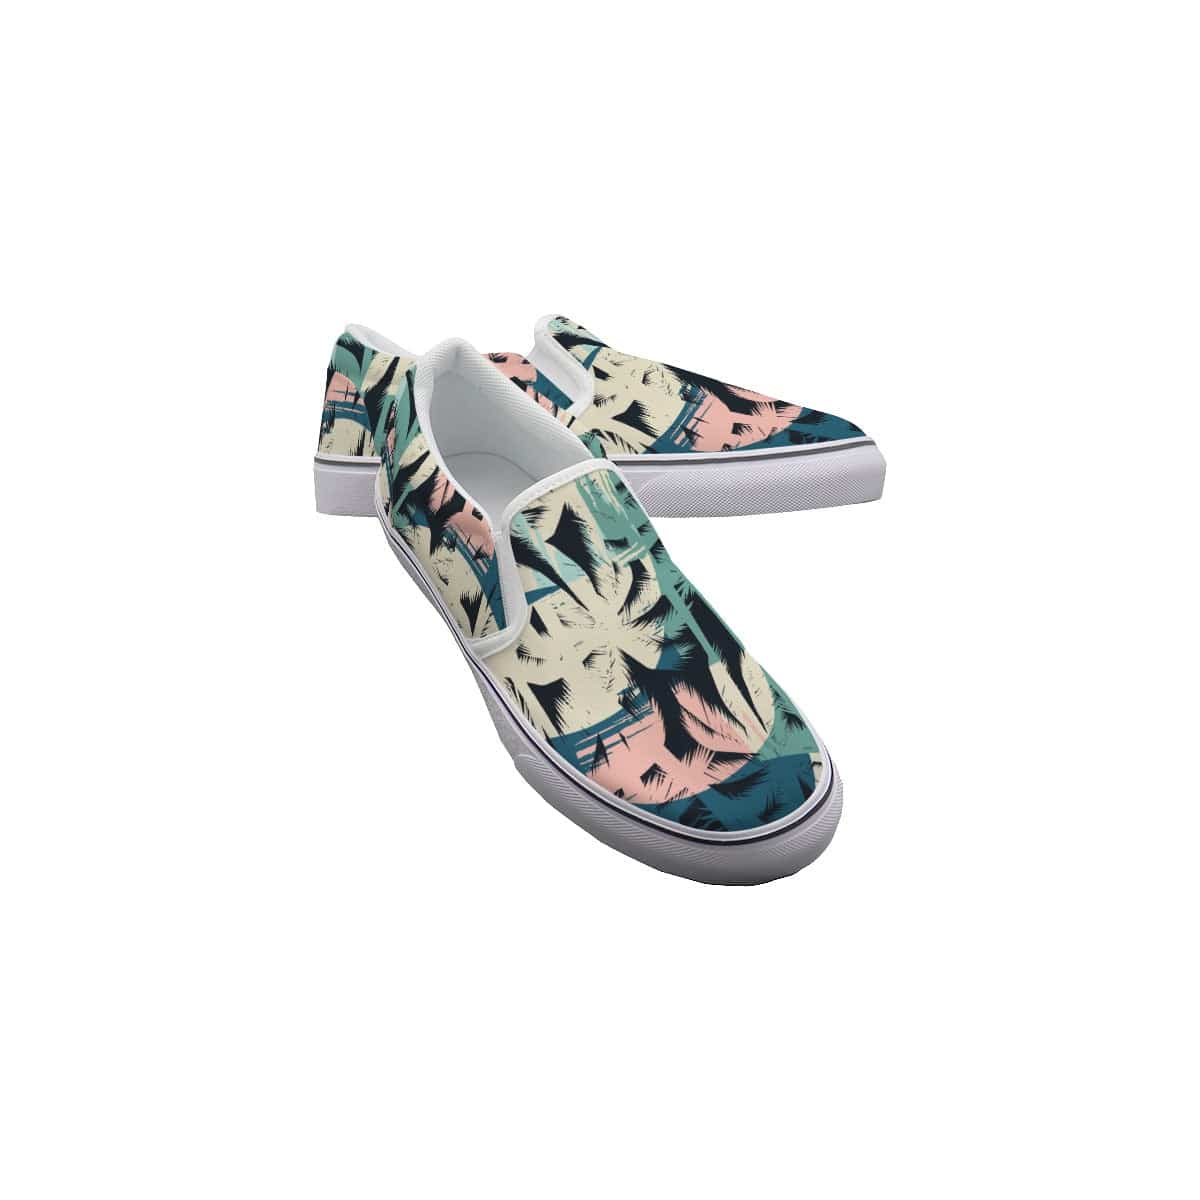 Yoycol White / US6(EUR36) PukaPuka  II Treads - Women's Slip On Sneakers